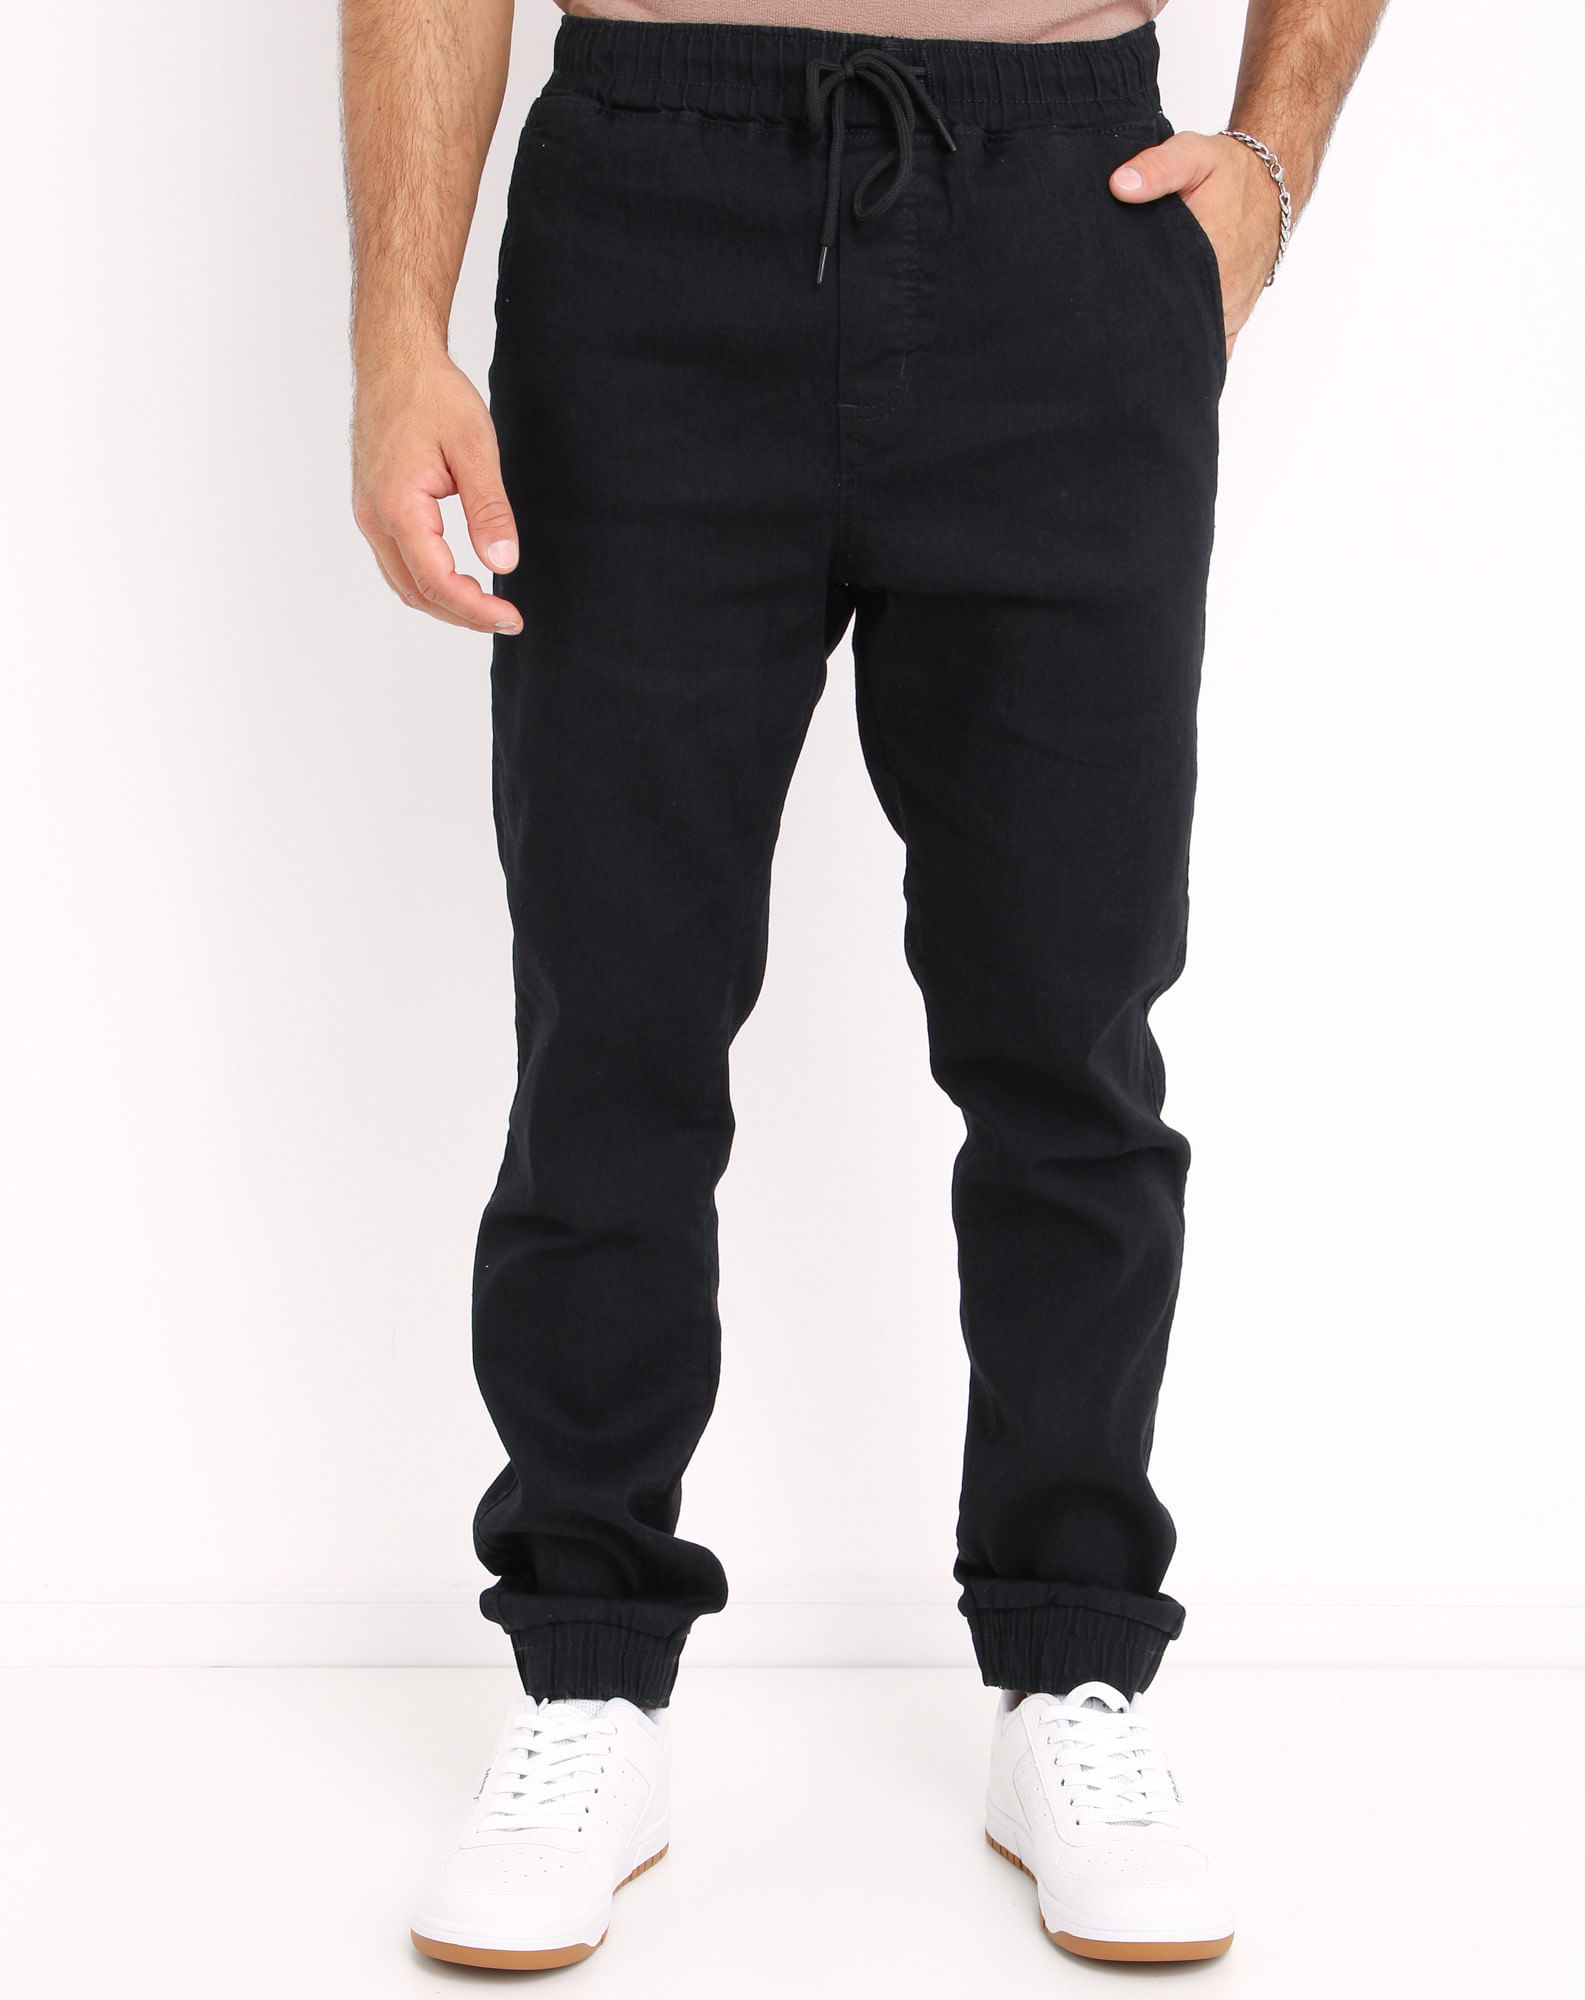 699255001 calça sarja jogger masculina com elástico black p c6b